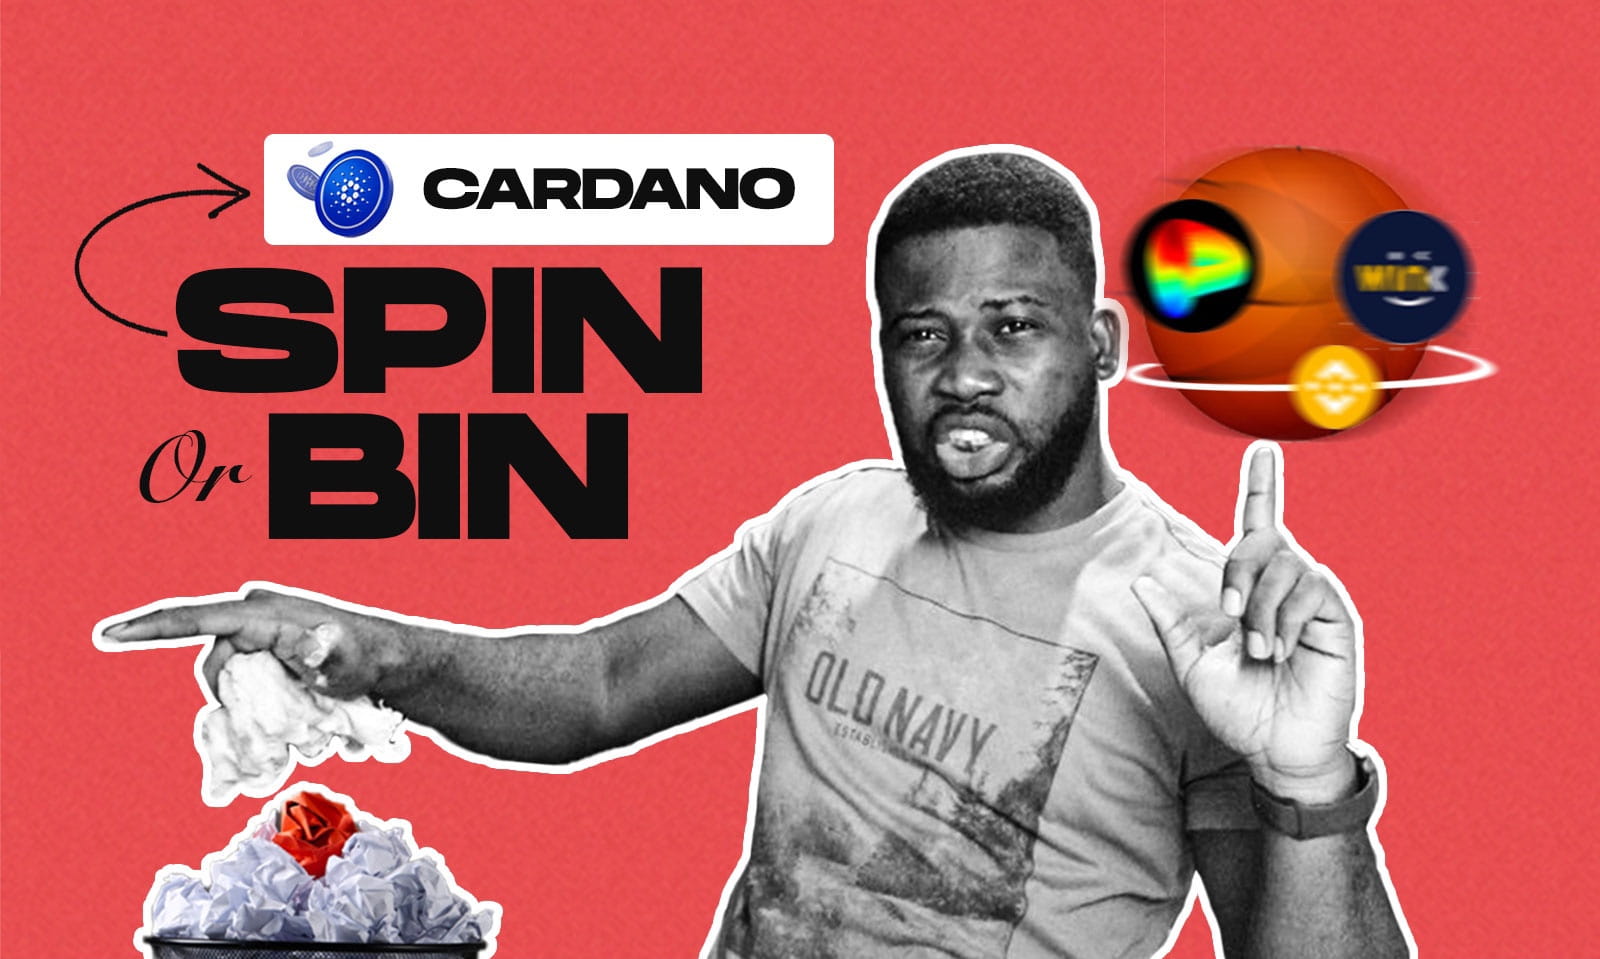 Should we Spin or Bin Cardano ?